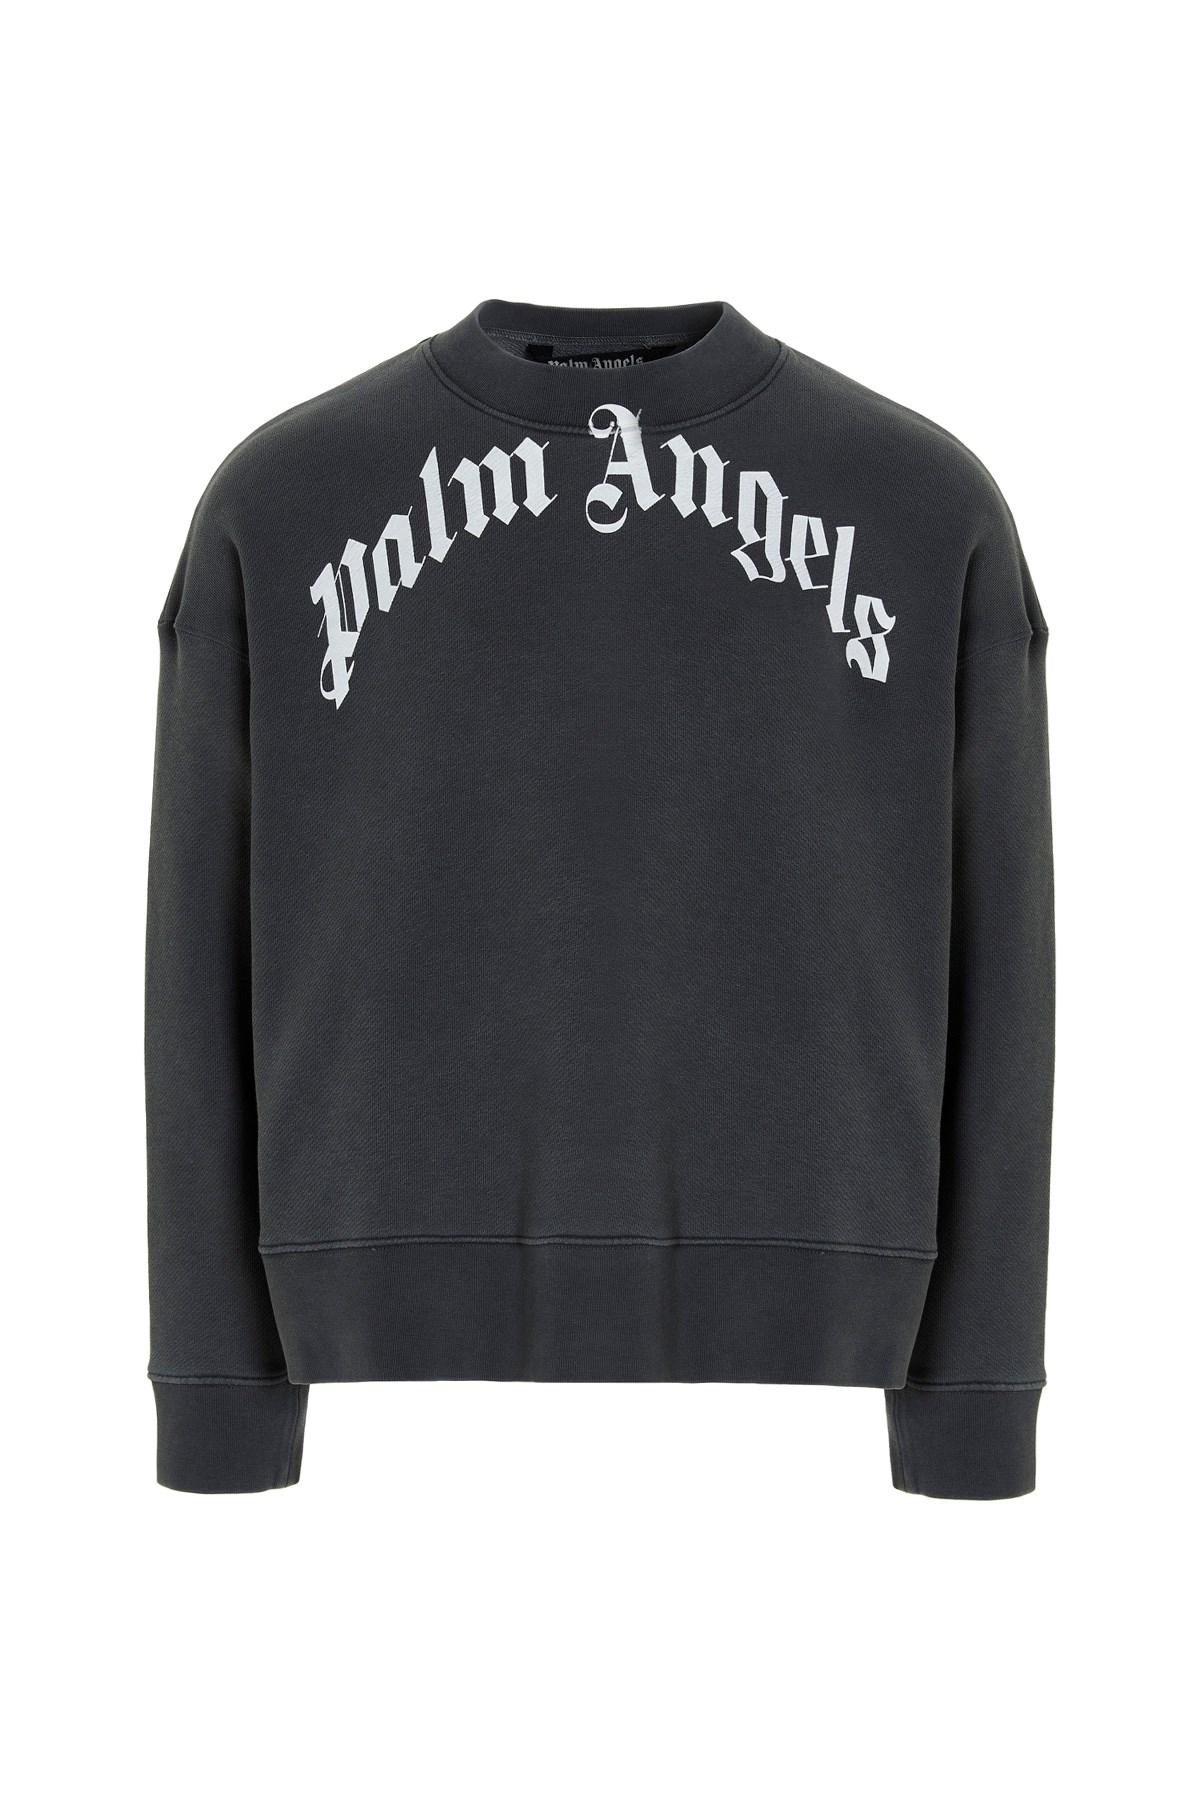 PALM ANGELS 'Curved Logo' Sweatshirt